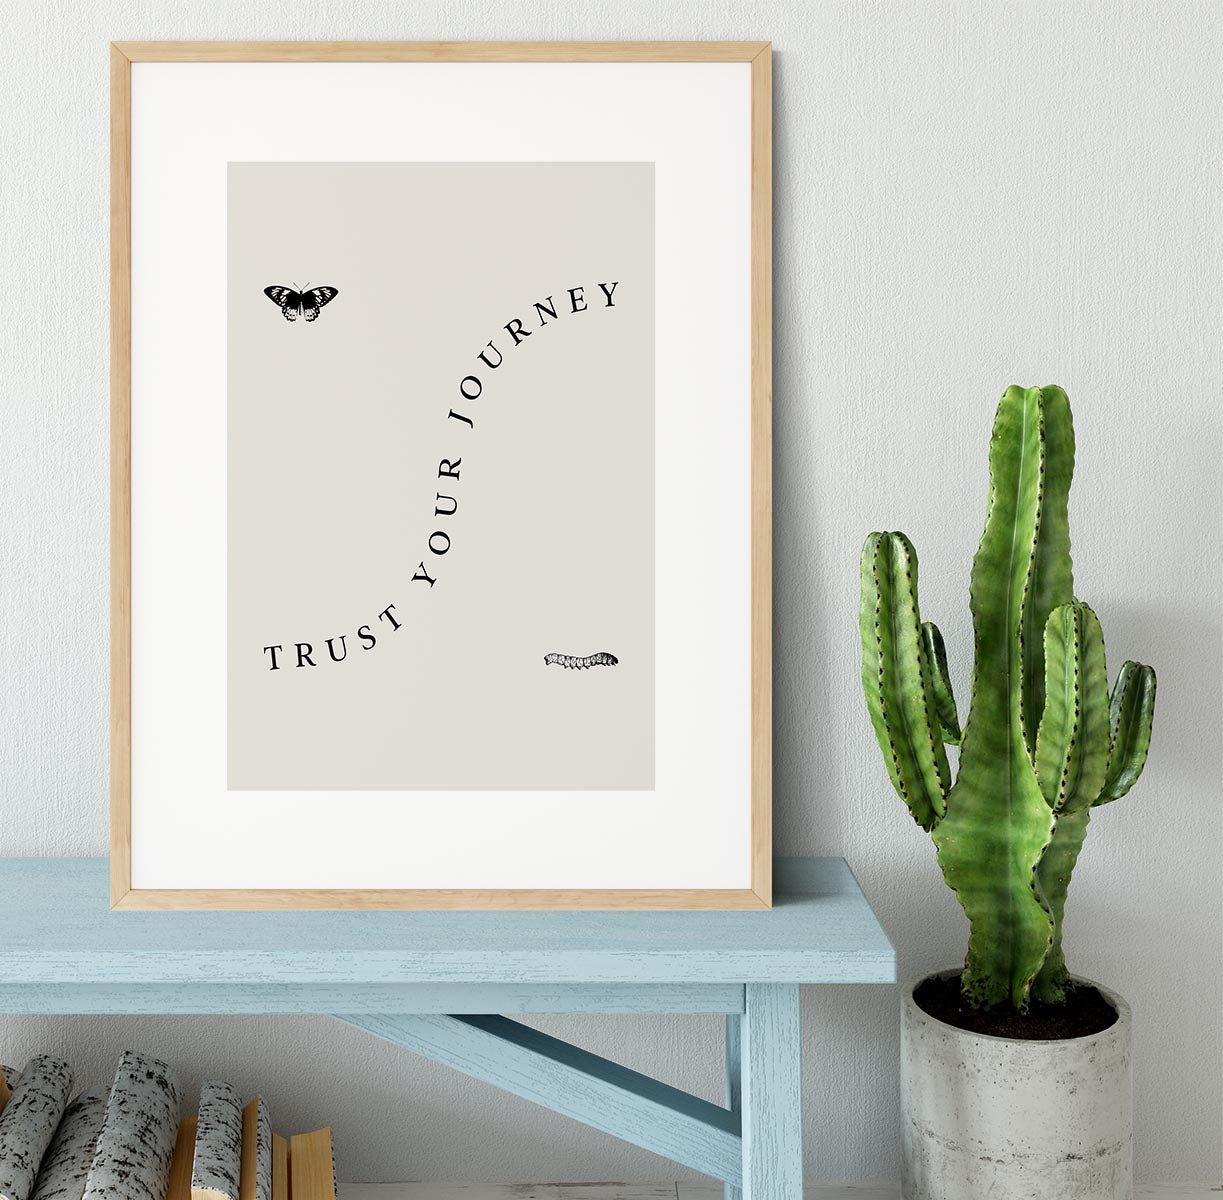 Trust Your Journey Framed Print - Canvas Art Rocks - 3